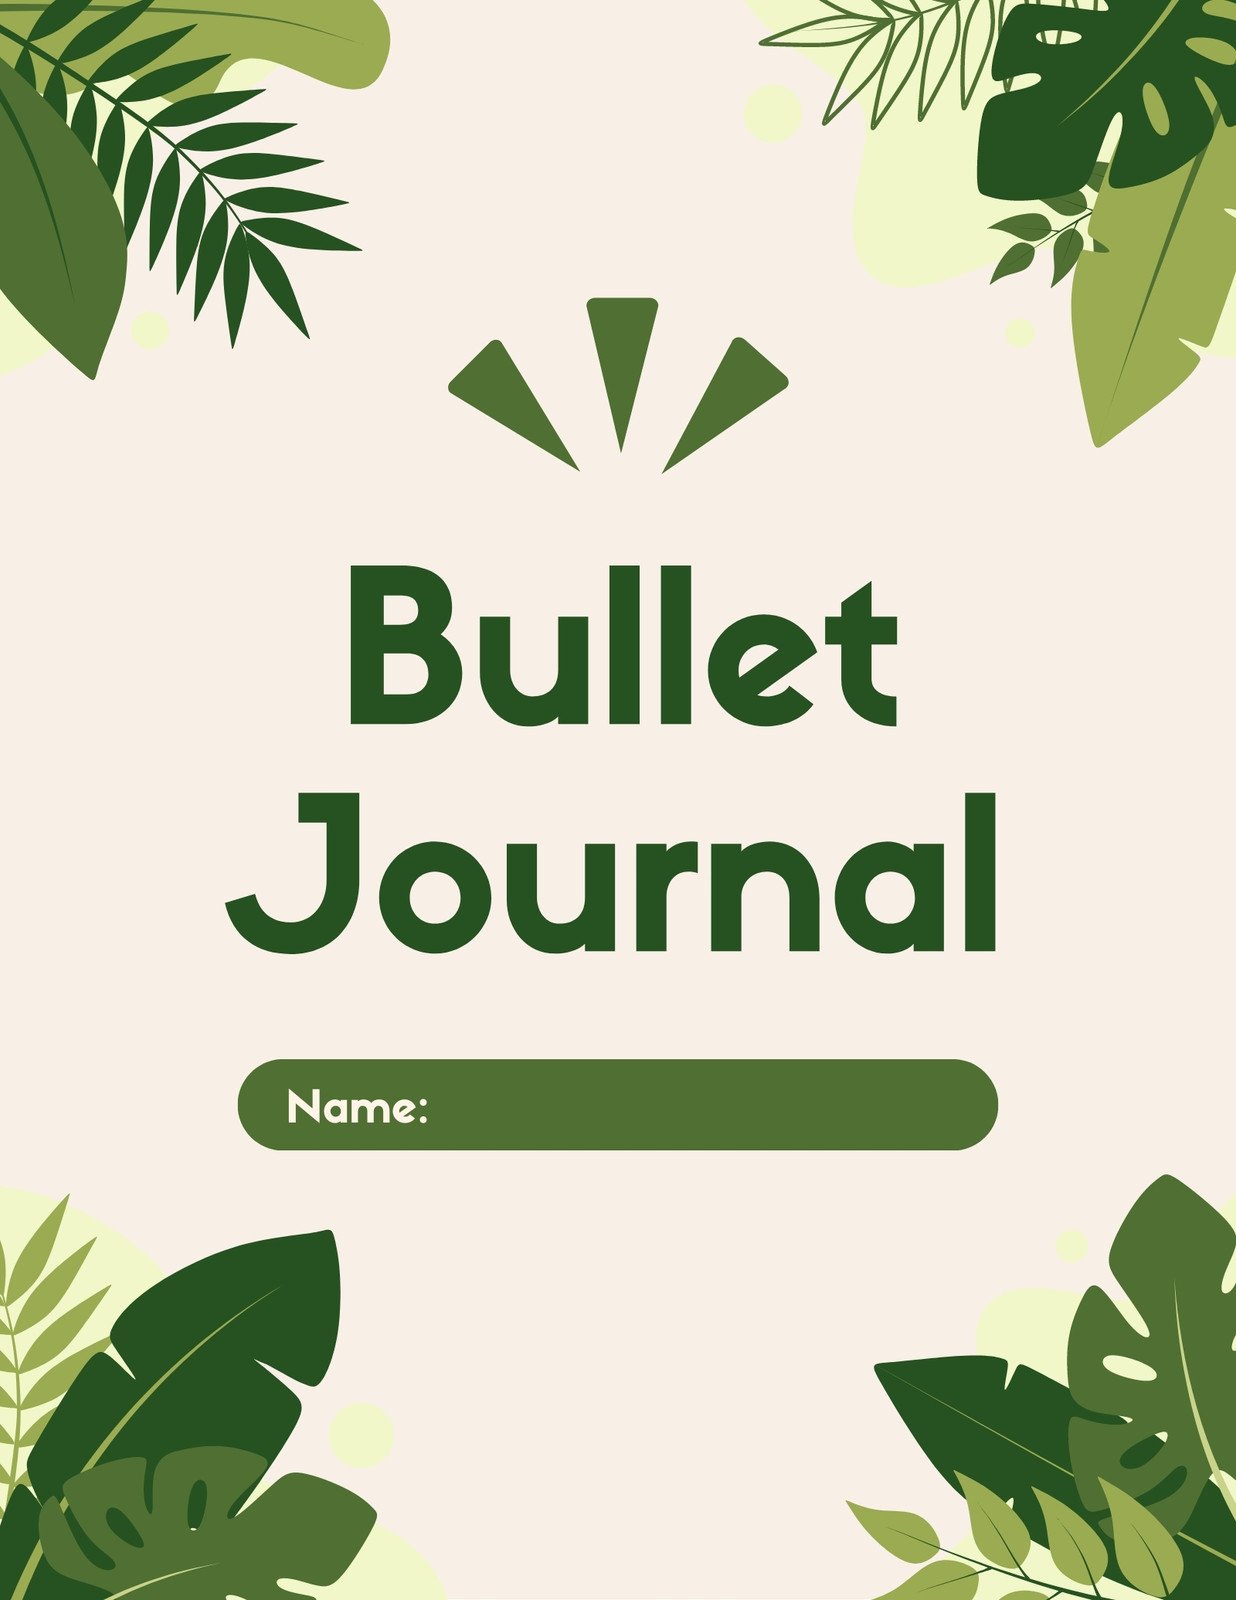 28 Useful Bullet Journal Templates (100% FREE) ᐅ TemplateLab